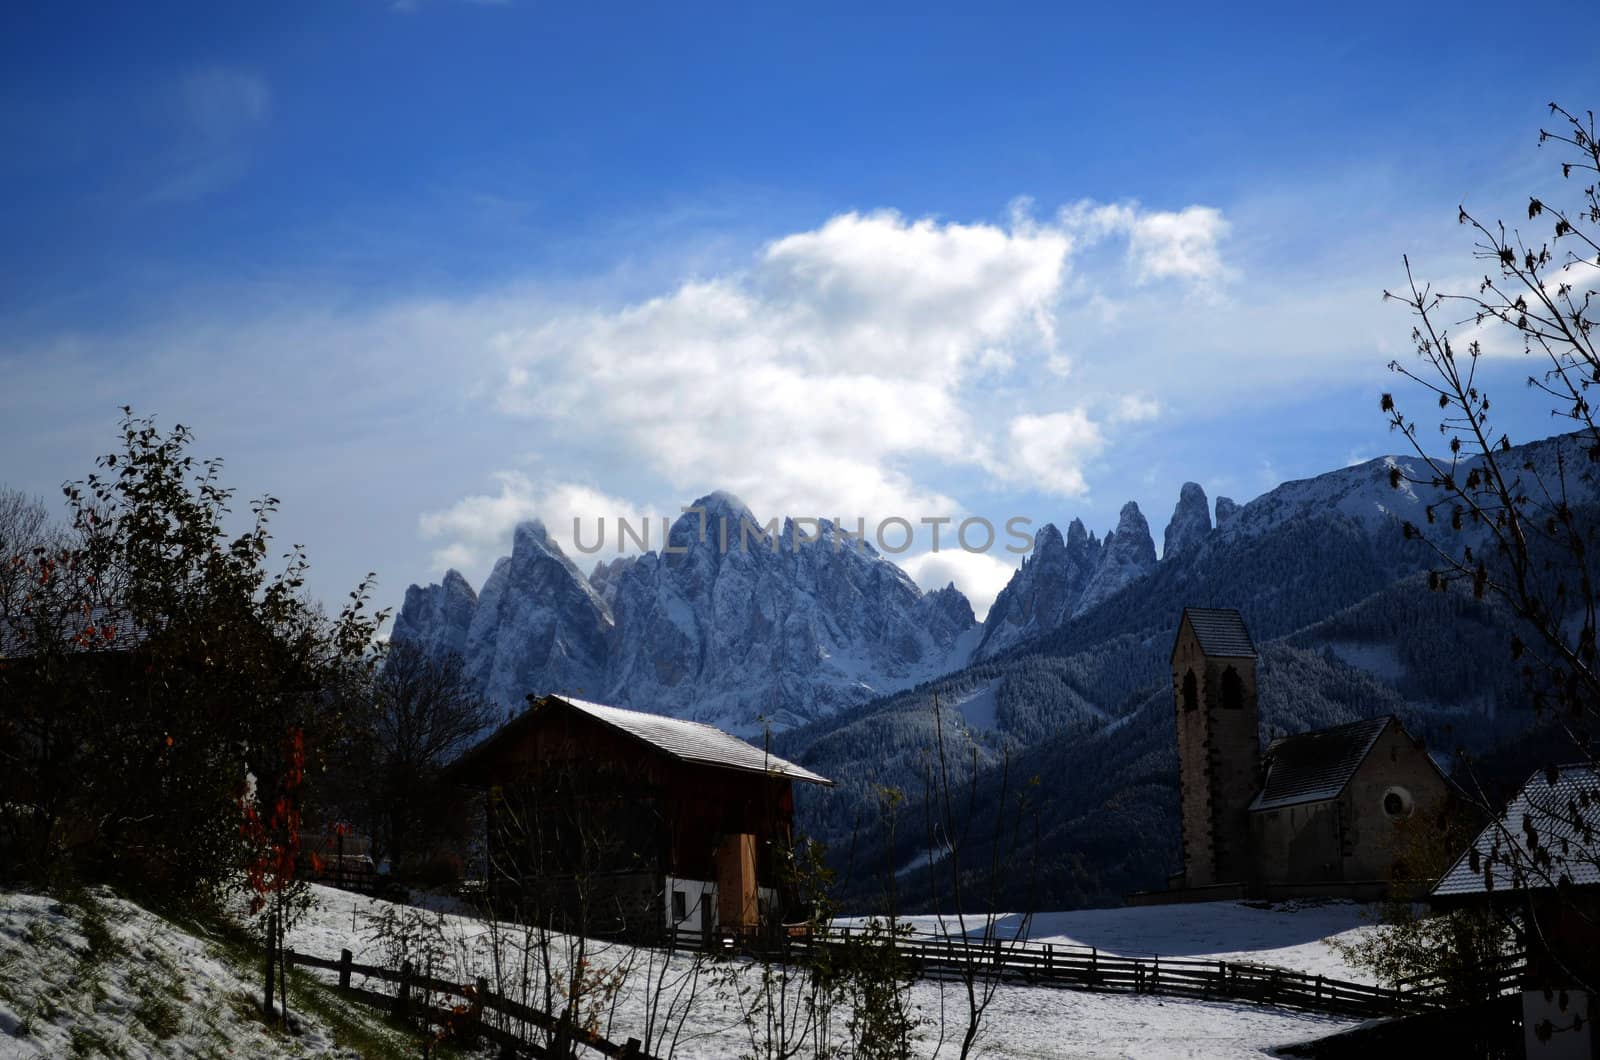 Dolomites mountain village by pljvv